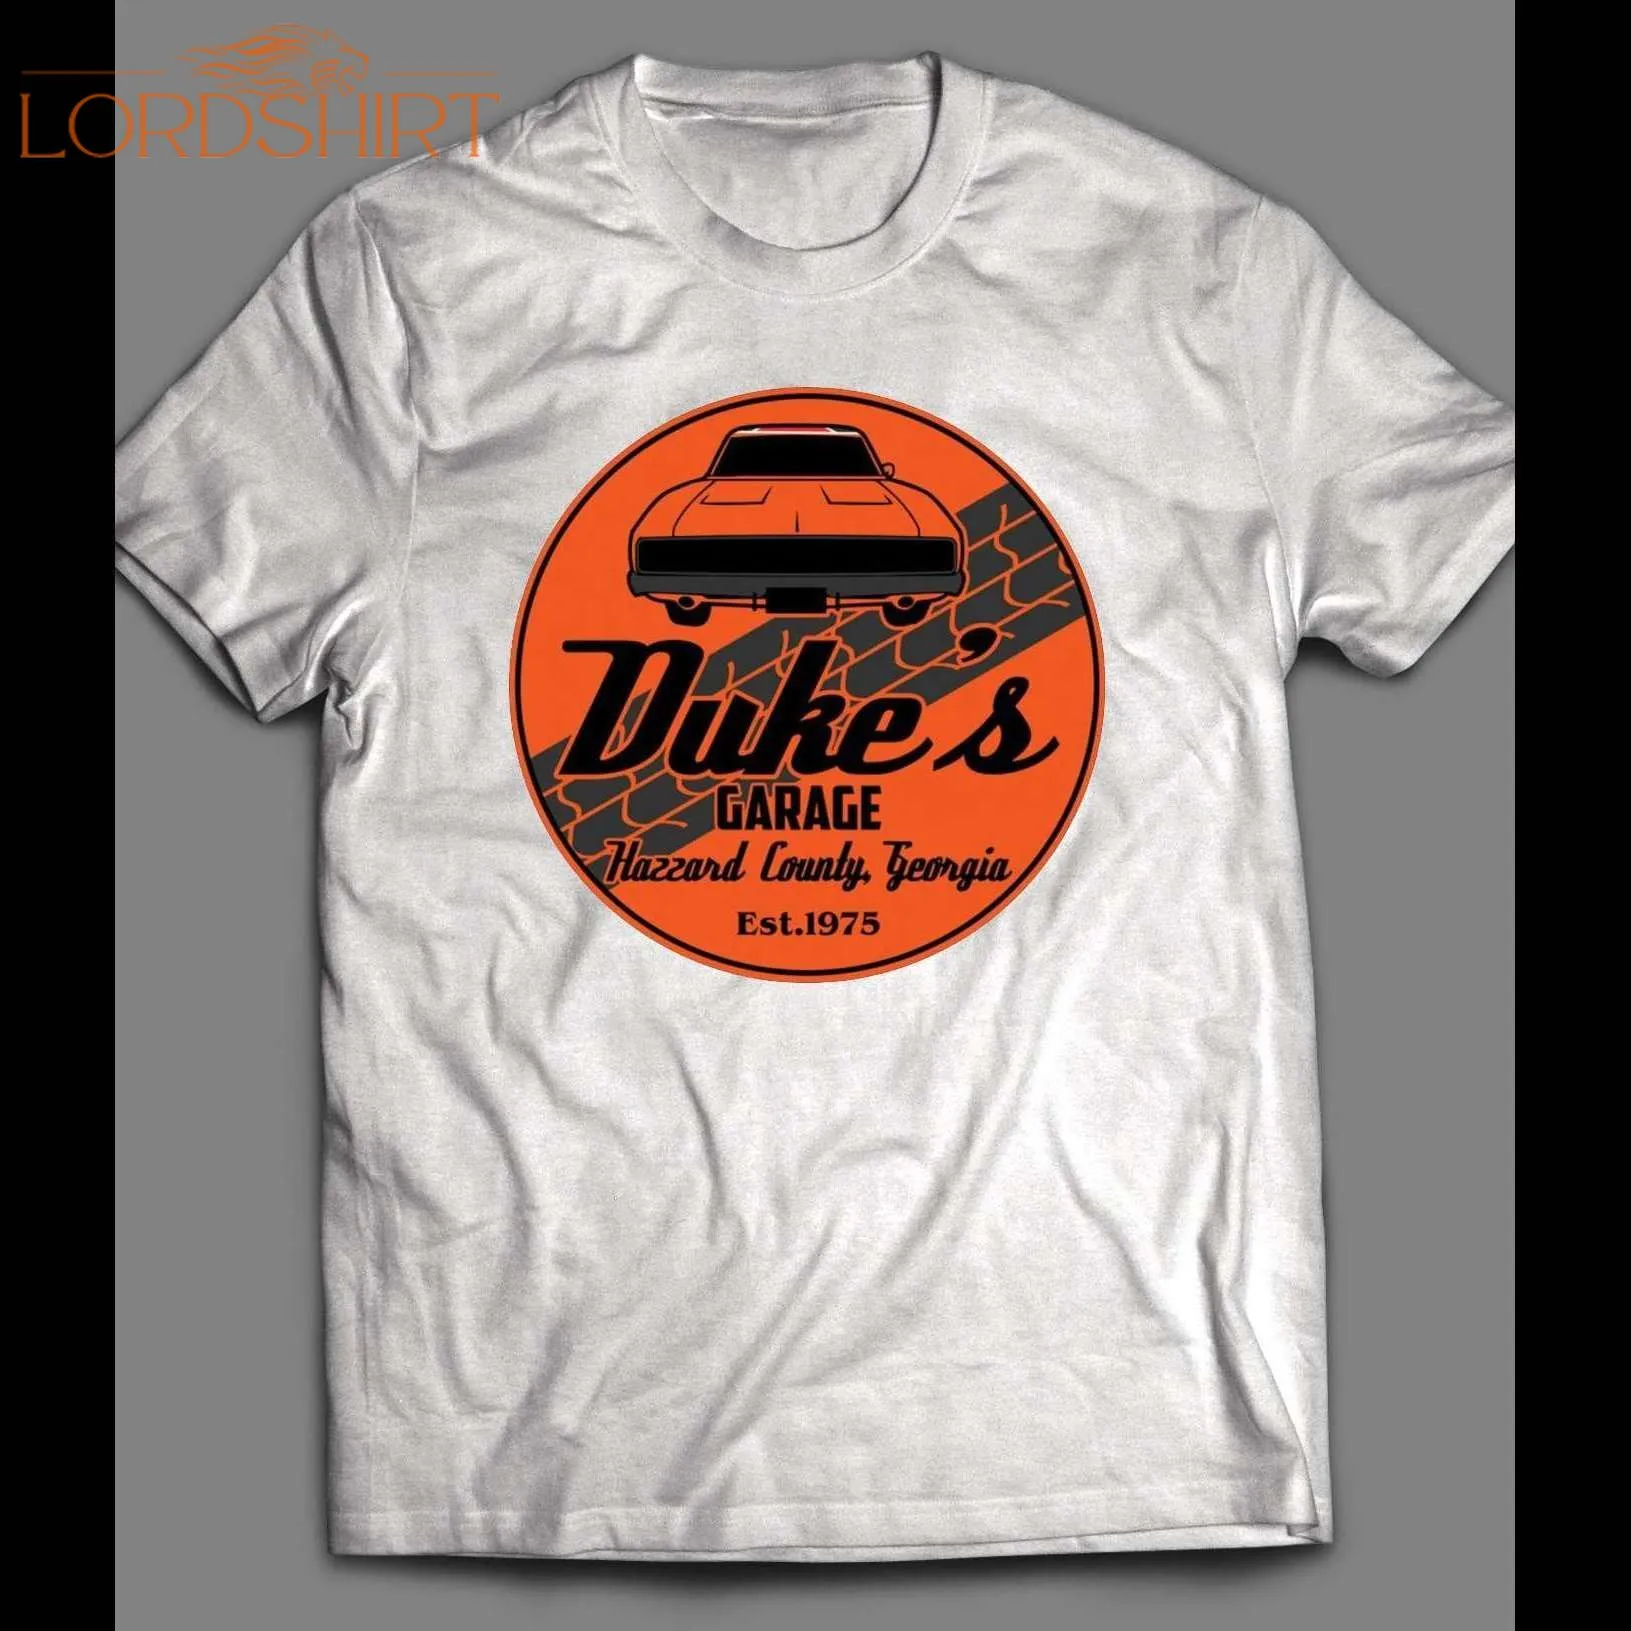 Duke's Garage From Dukes Of Hazard Tv Show Shirt